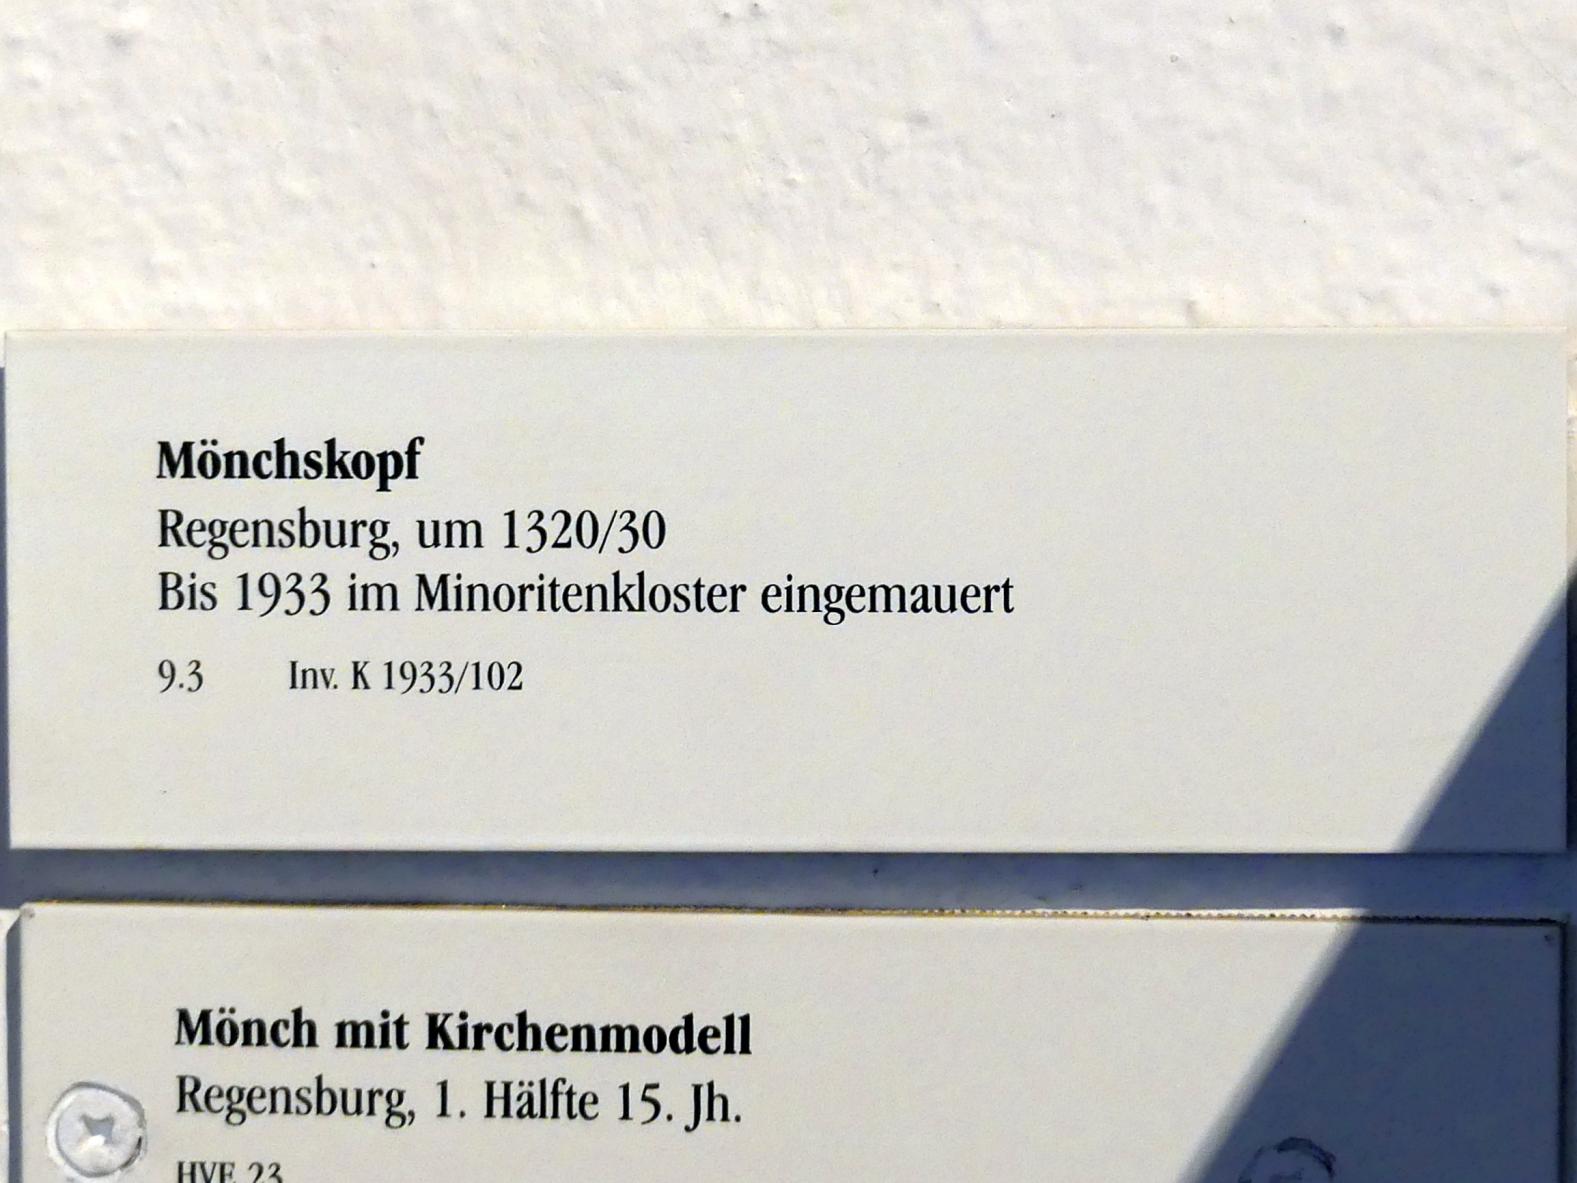 Mönchskopf, Regensburg, ehem. Franziskanerkloster St. Salvator, heute Museum, jetzt Regensburg, Historisches Museum, um 1320–1330, Bild 3/3